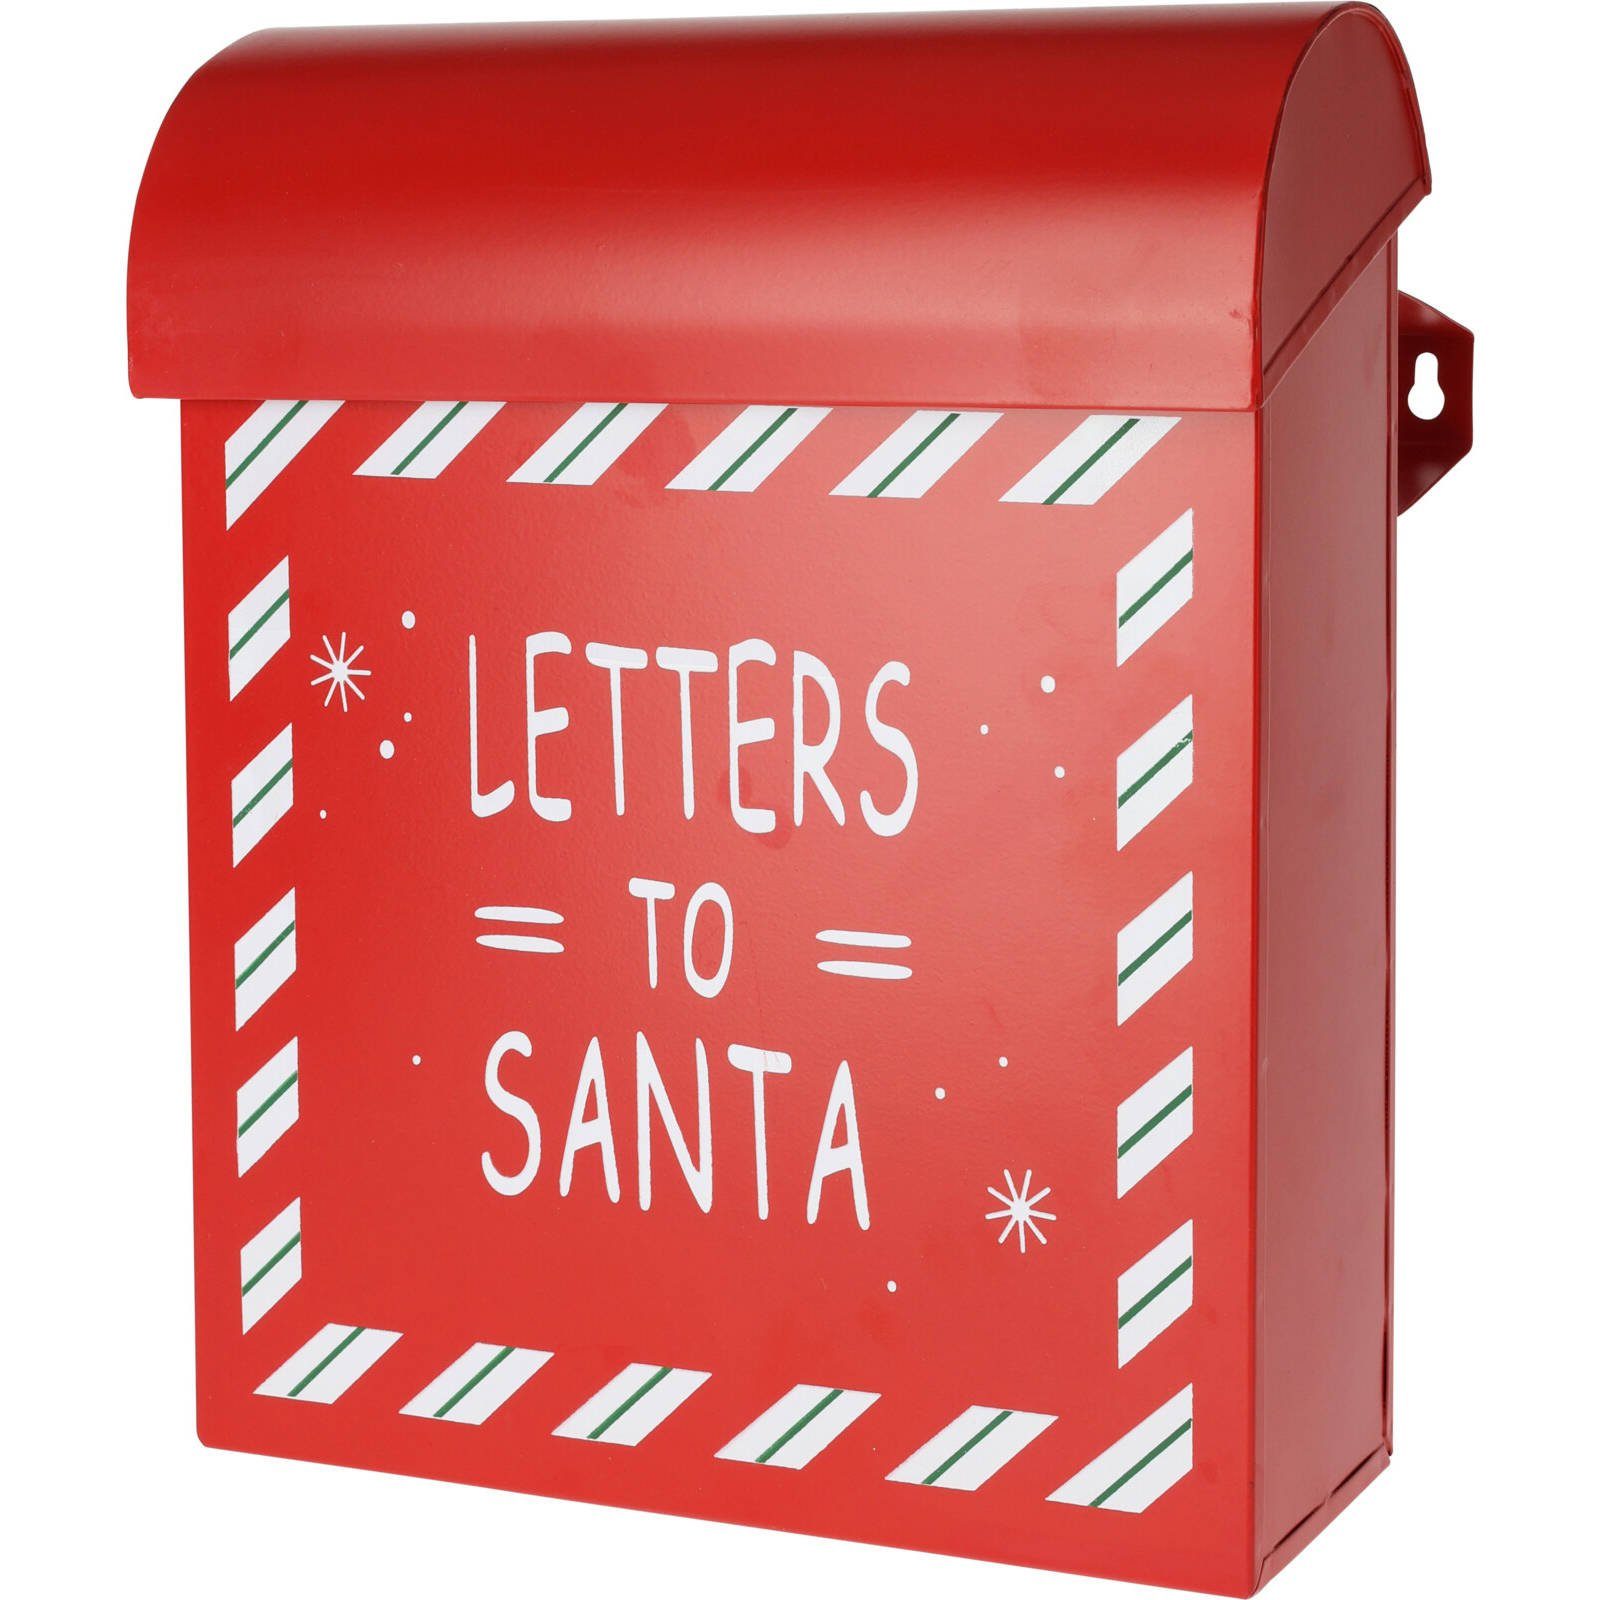 Santa collection & Briefkasten Home Weihnachtsfigur Letters styling To